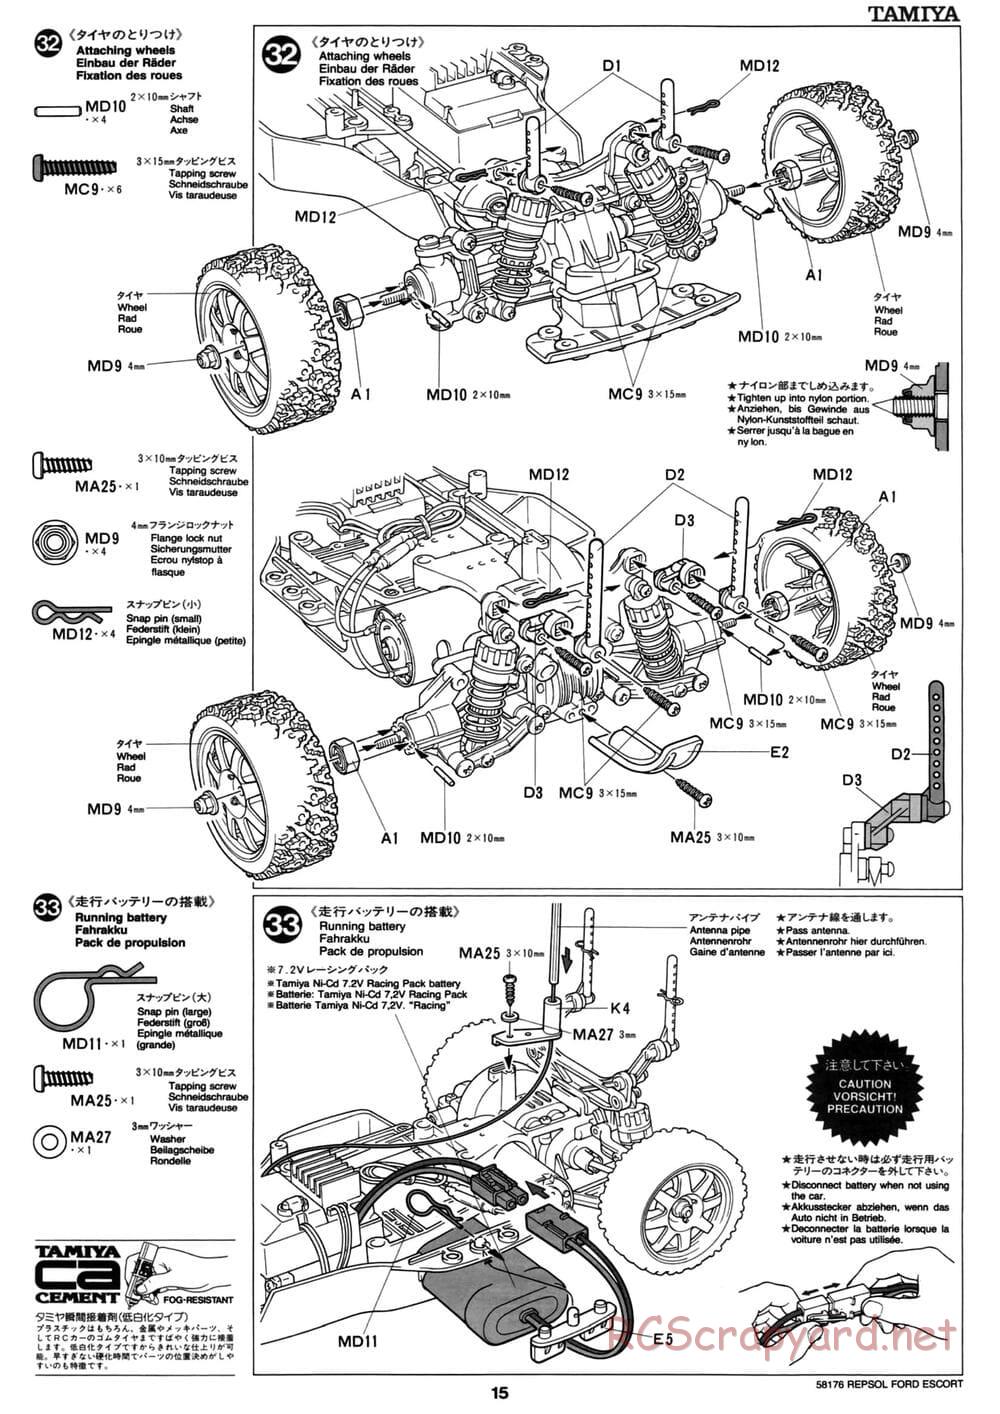 Tamiya - Repsol Ford Escort RS Cosworth - TA-02 Chassis - Manual - Page 15